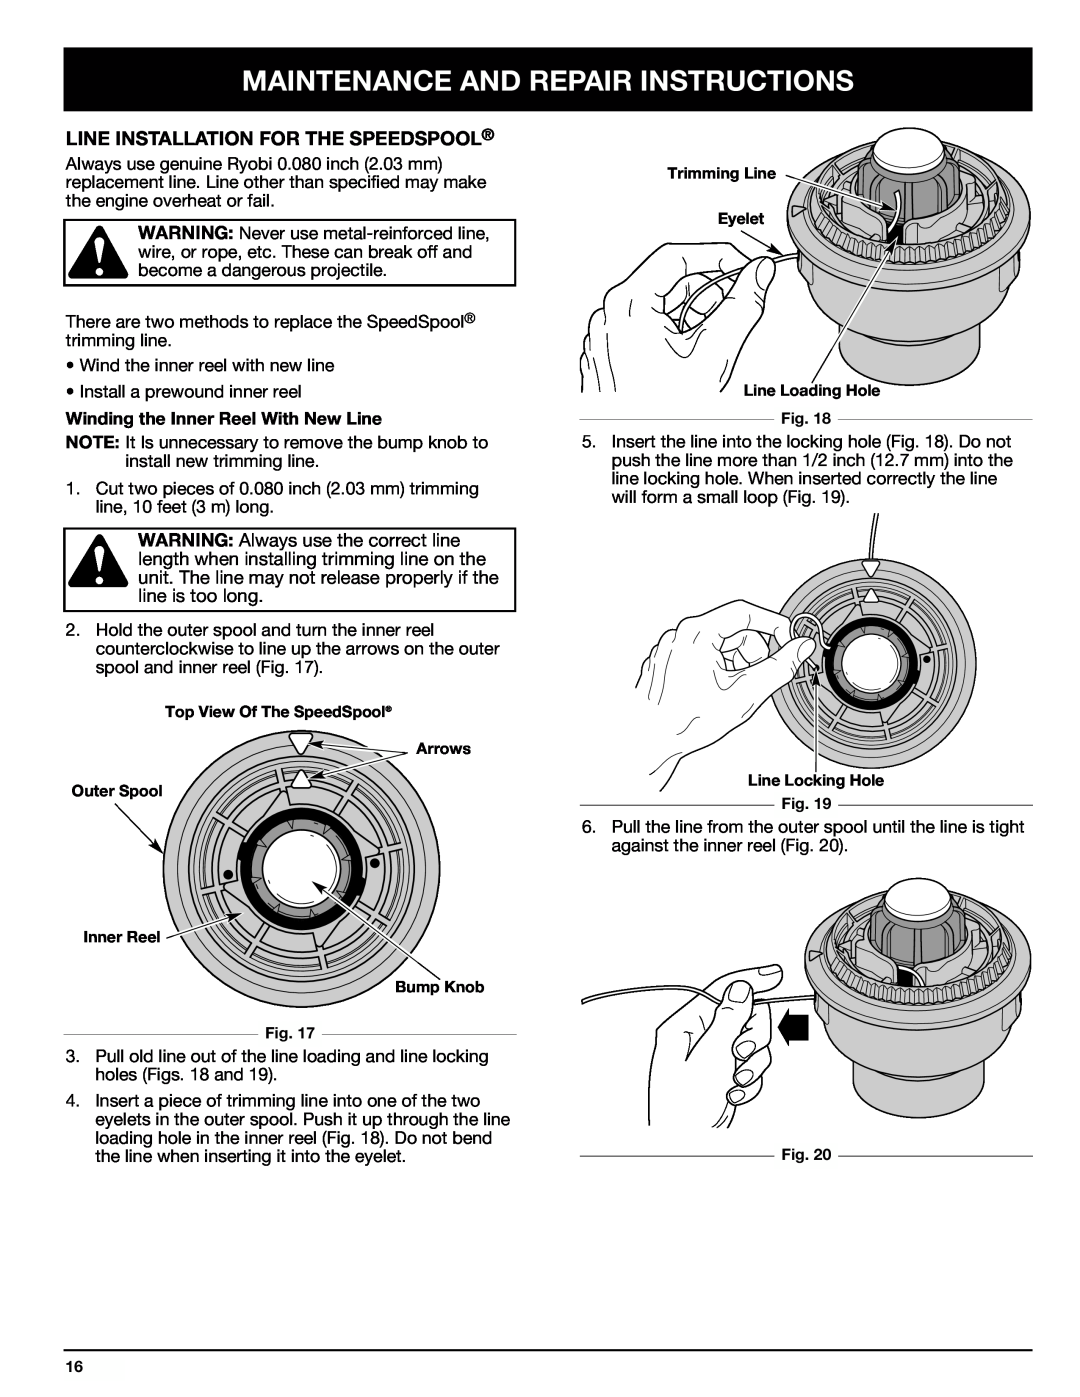 Ryobi Outdoor 875r manual Line Installation For The Speedspool, Maintenance And Repair Instructions 